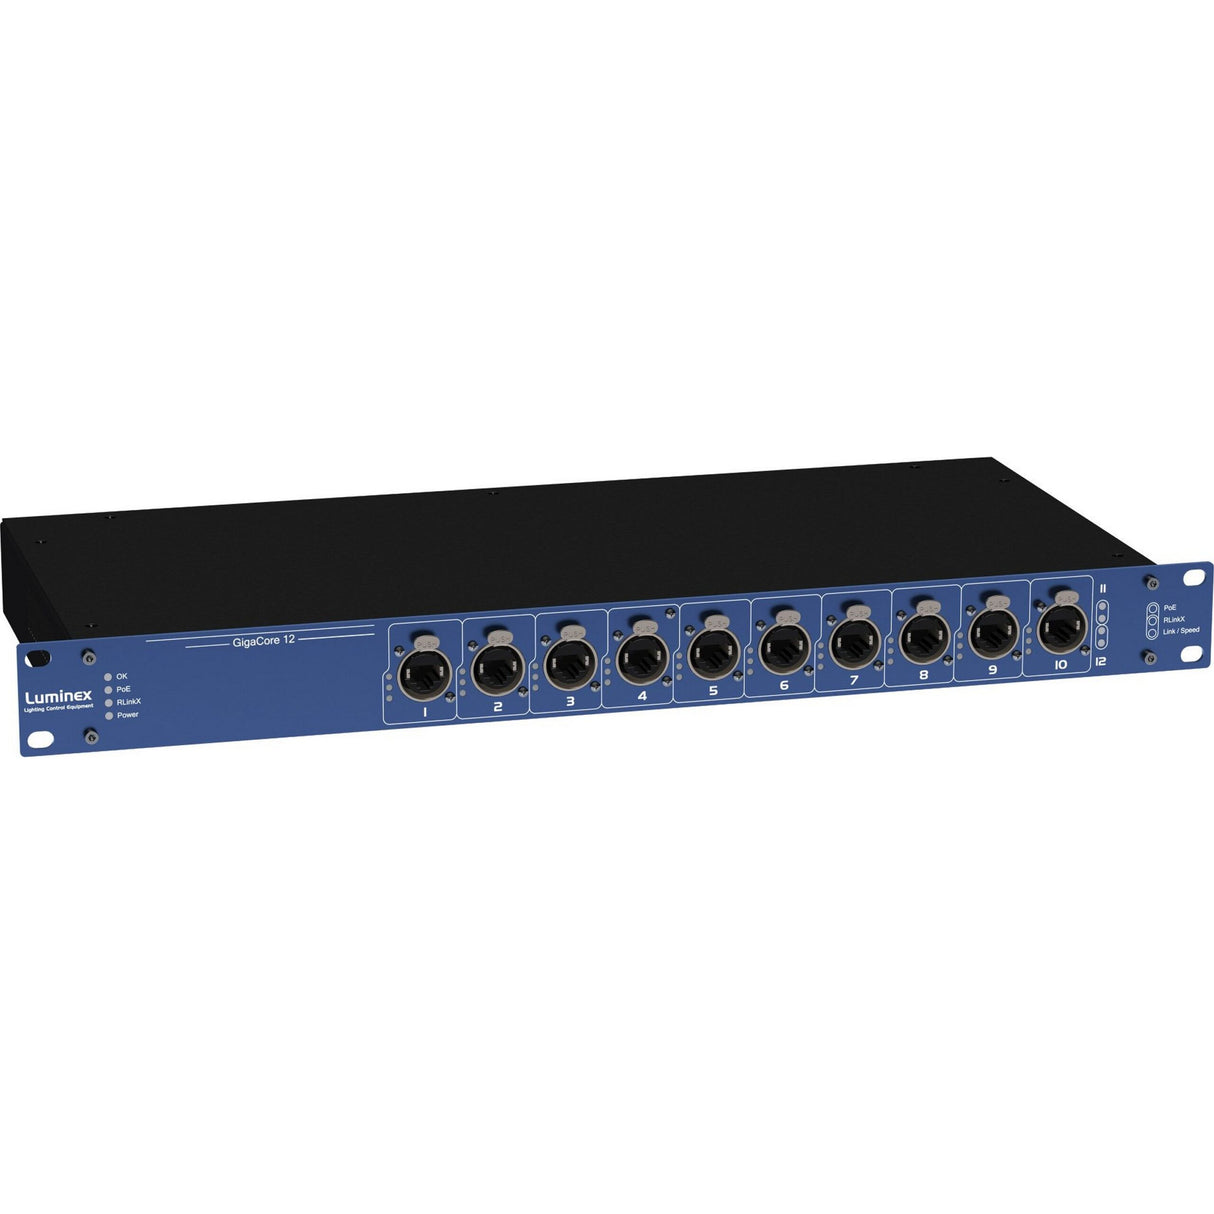 Luminex GigaCore 12 Rackmount Touring 12-Port EtherCON Gigabit Ethernet Dante Switch